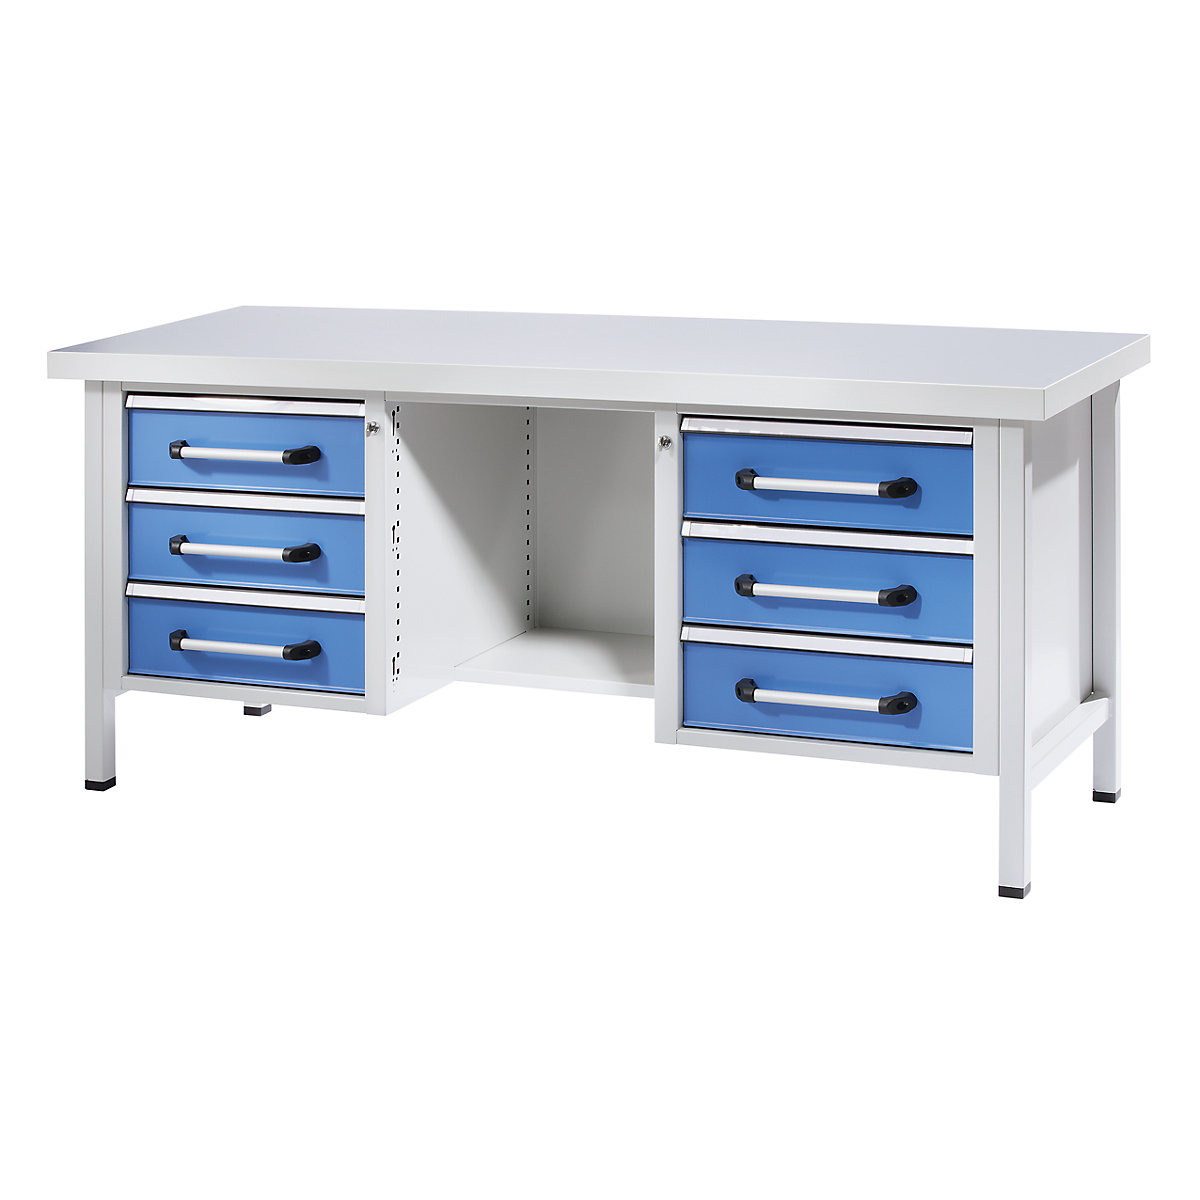 EUROKRAFTpro – Workbench, frame construction, width 2000 mm, 6 drawers, 1/2 shelf, universal worktop